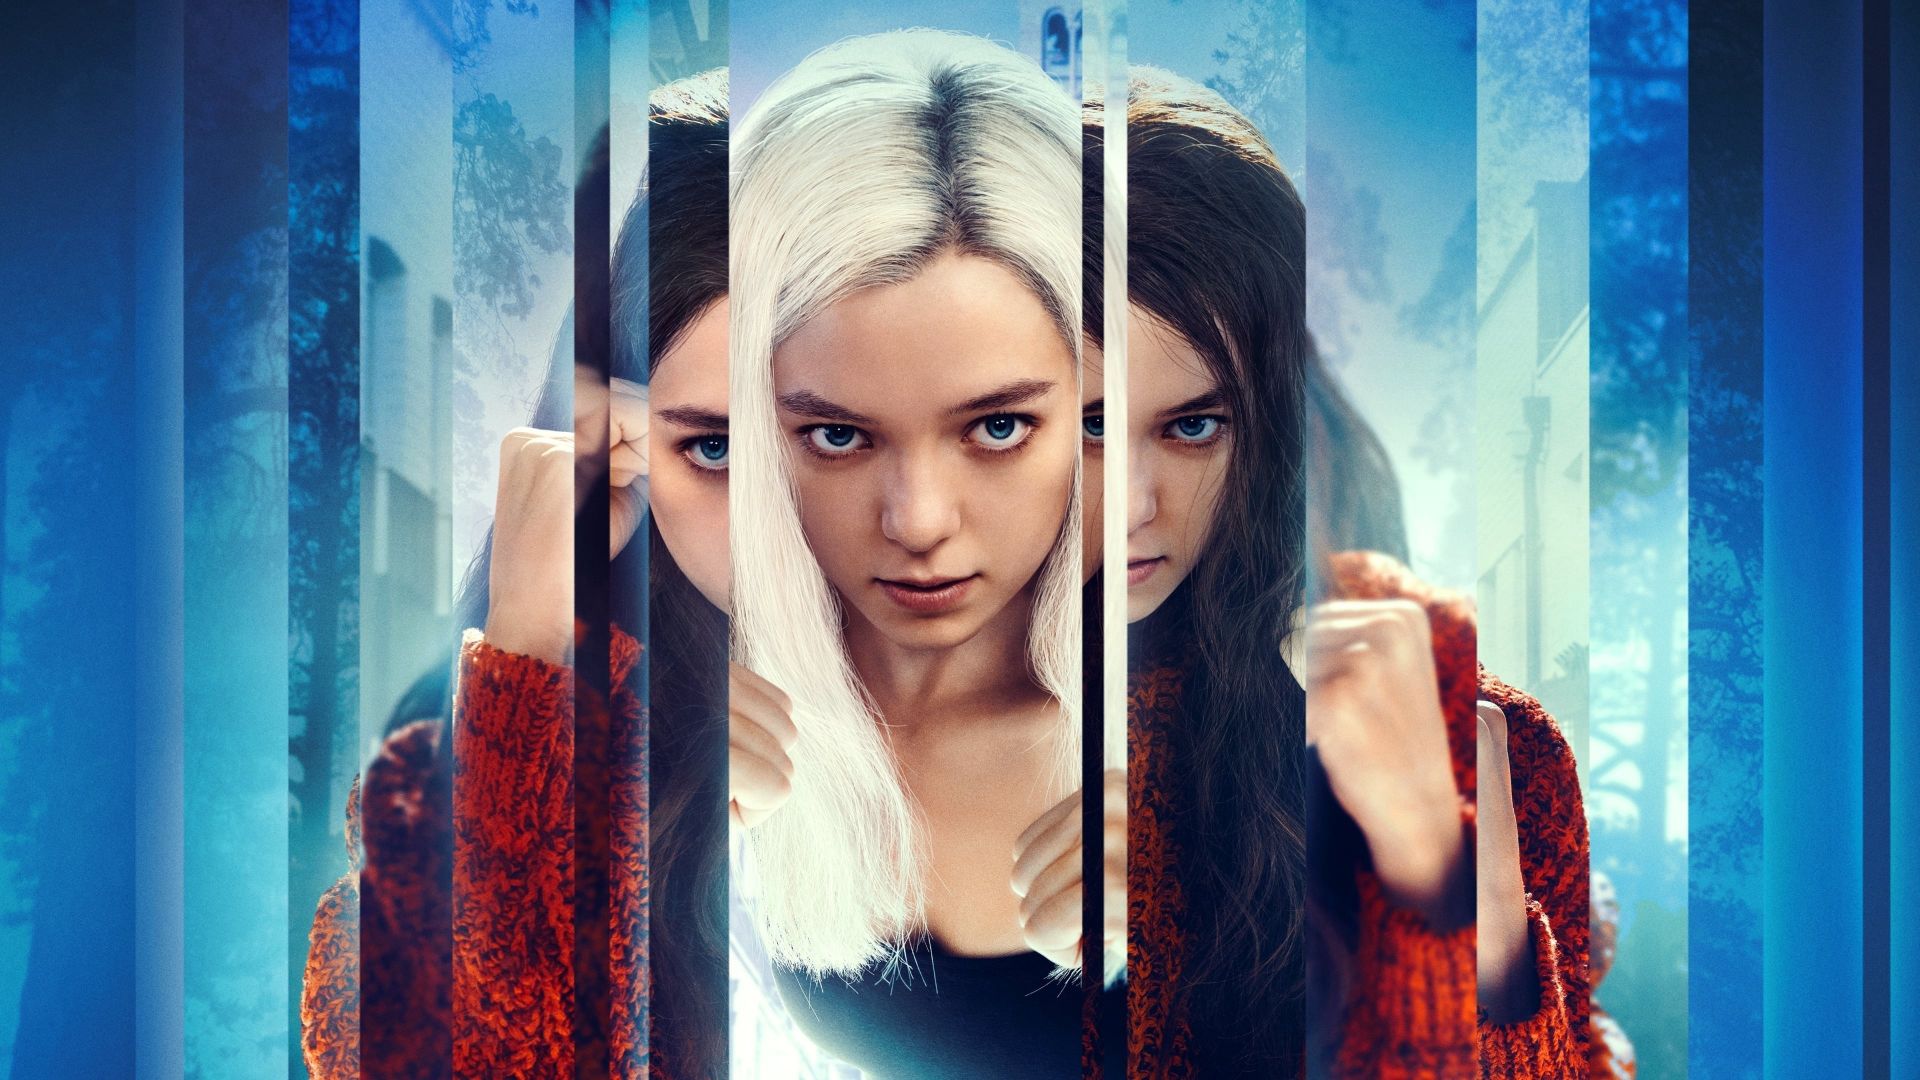 Wallpaper Esme Creed-Miles, Hanna, season 3, poster